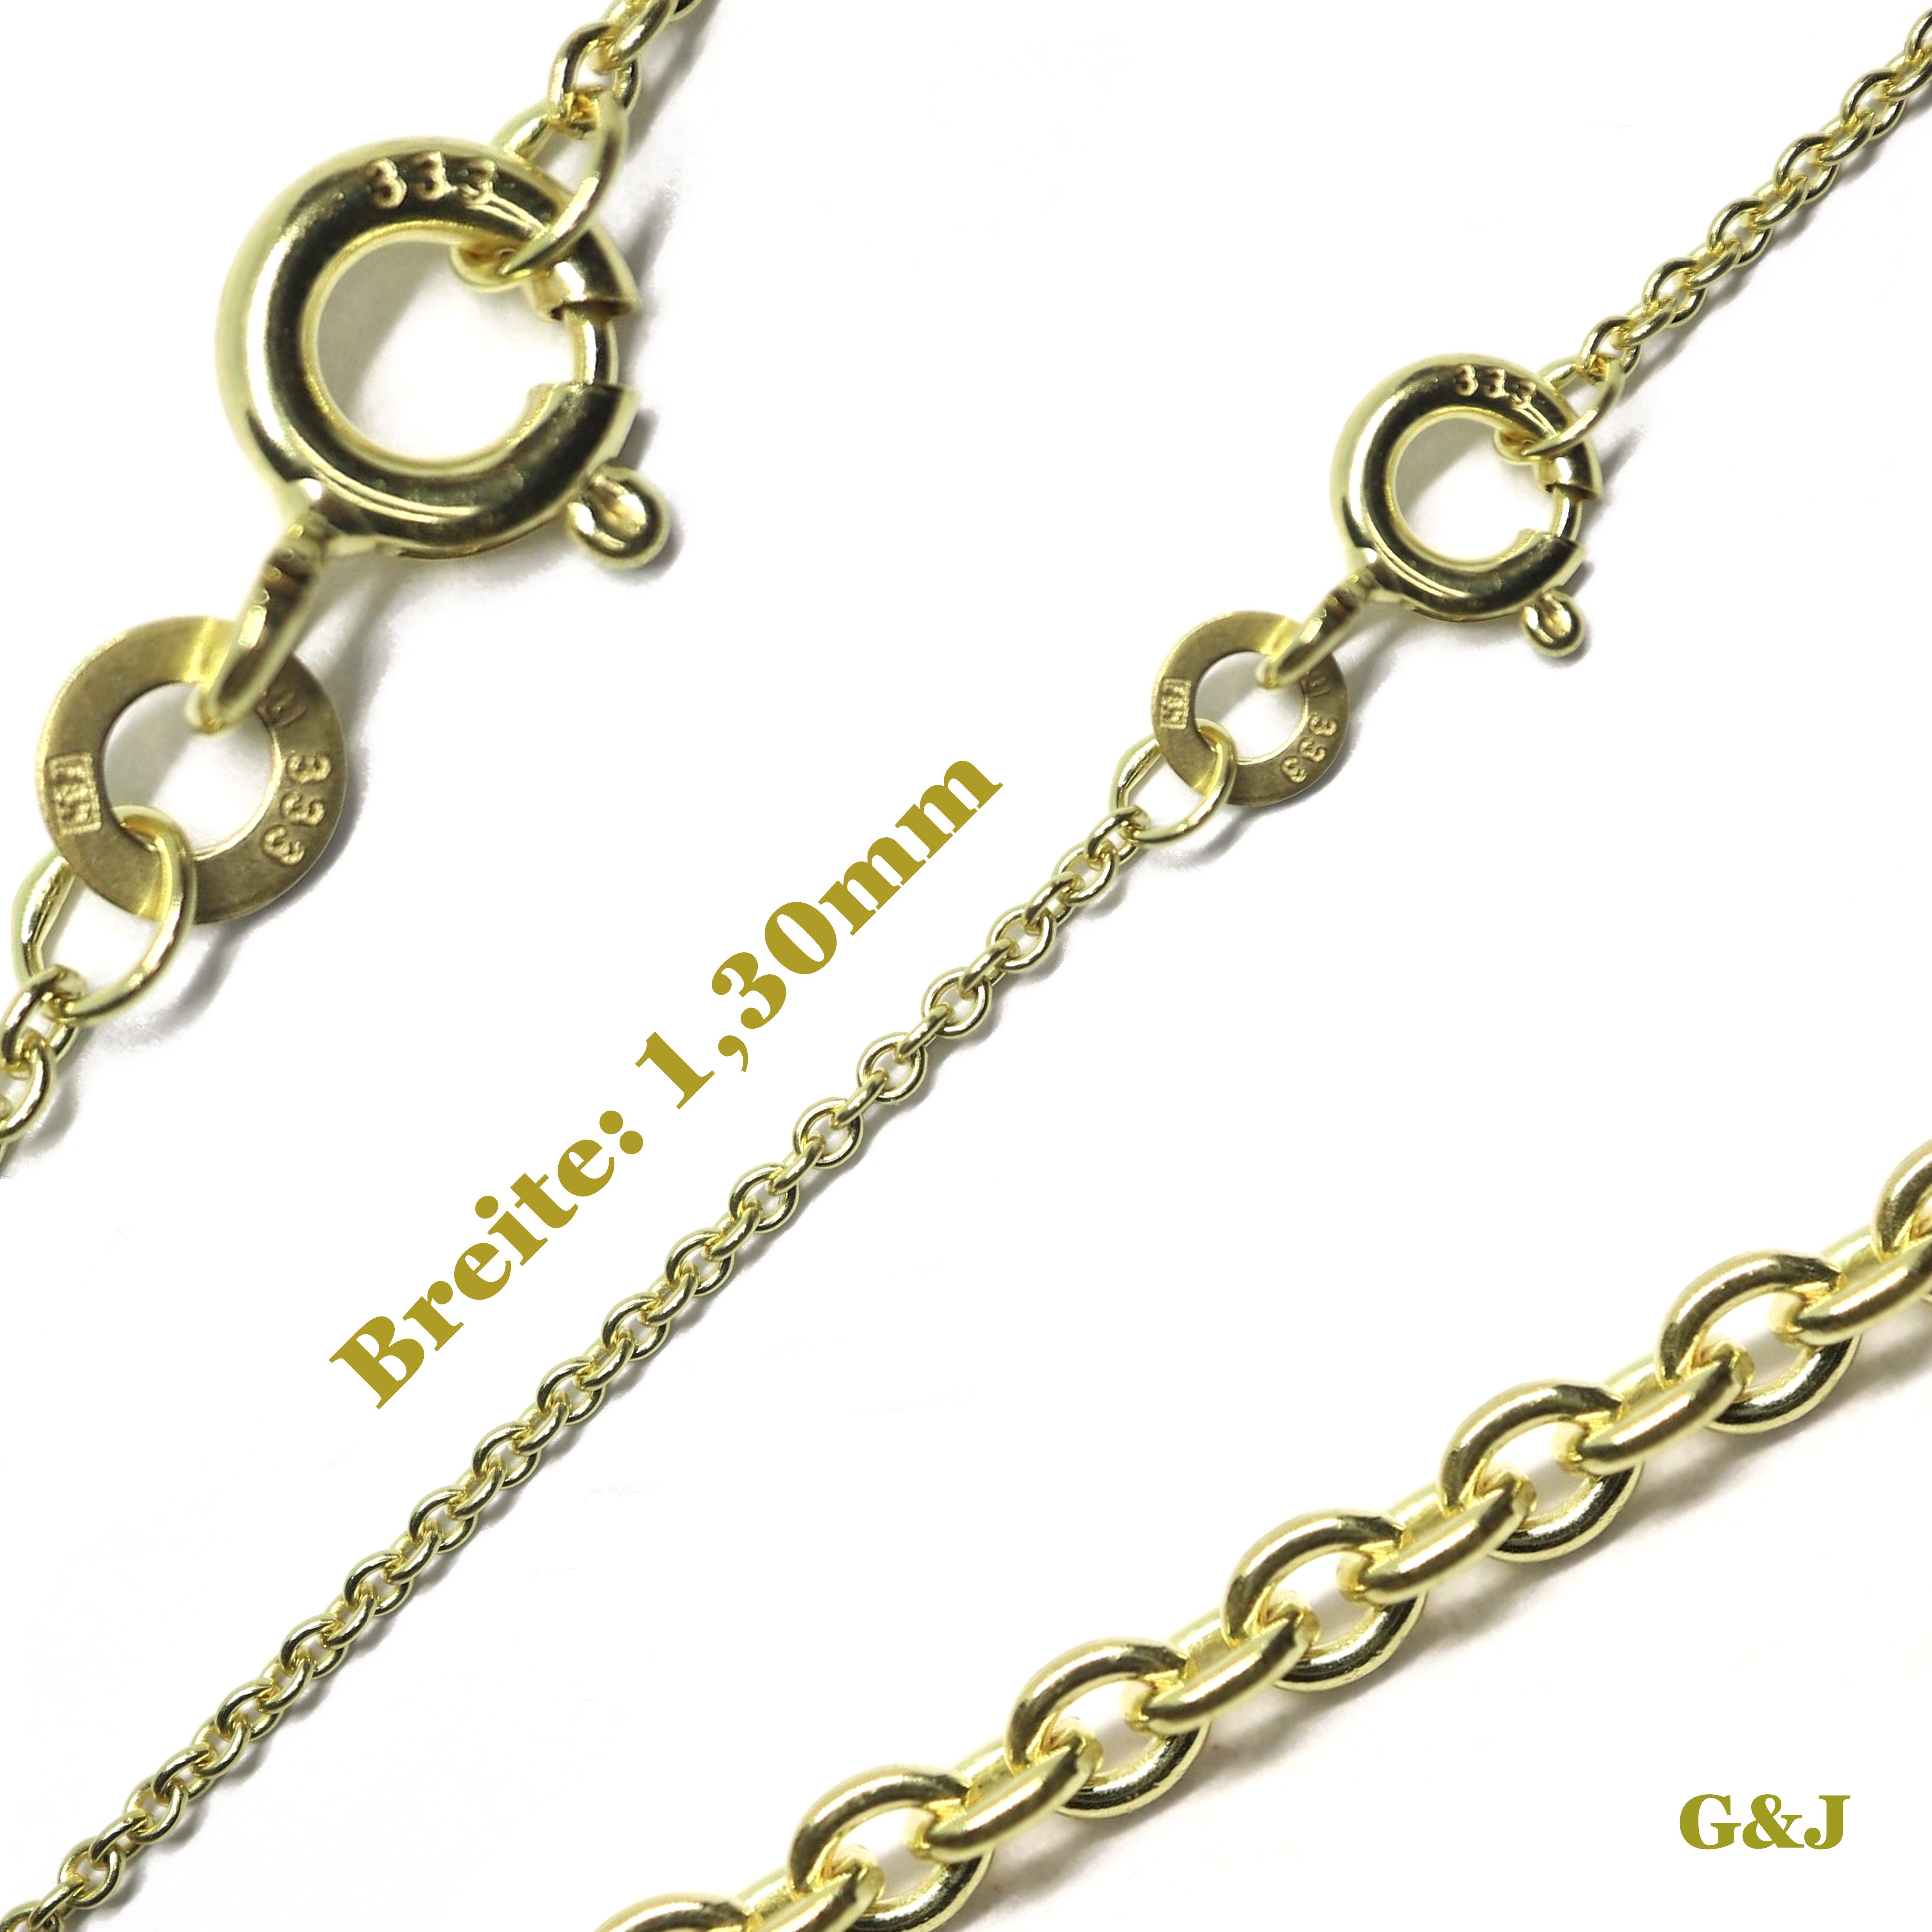 G & J Collier Ankerkette rund 333 8K Gold 1,30mm 45-60cm hochwertige edle  Halskette (inkl. Schmucketui), Made in Germany